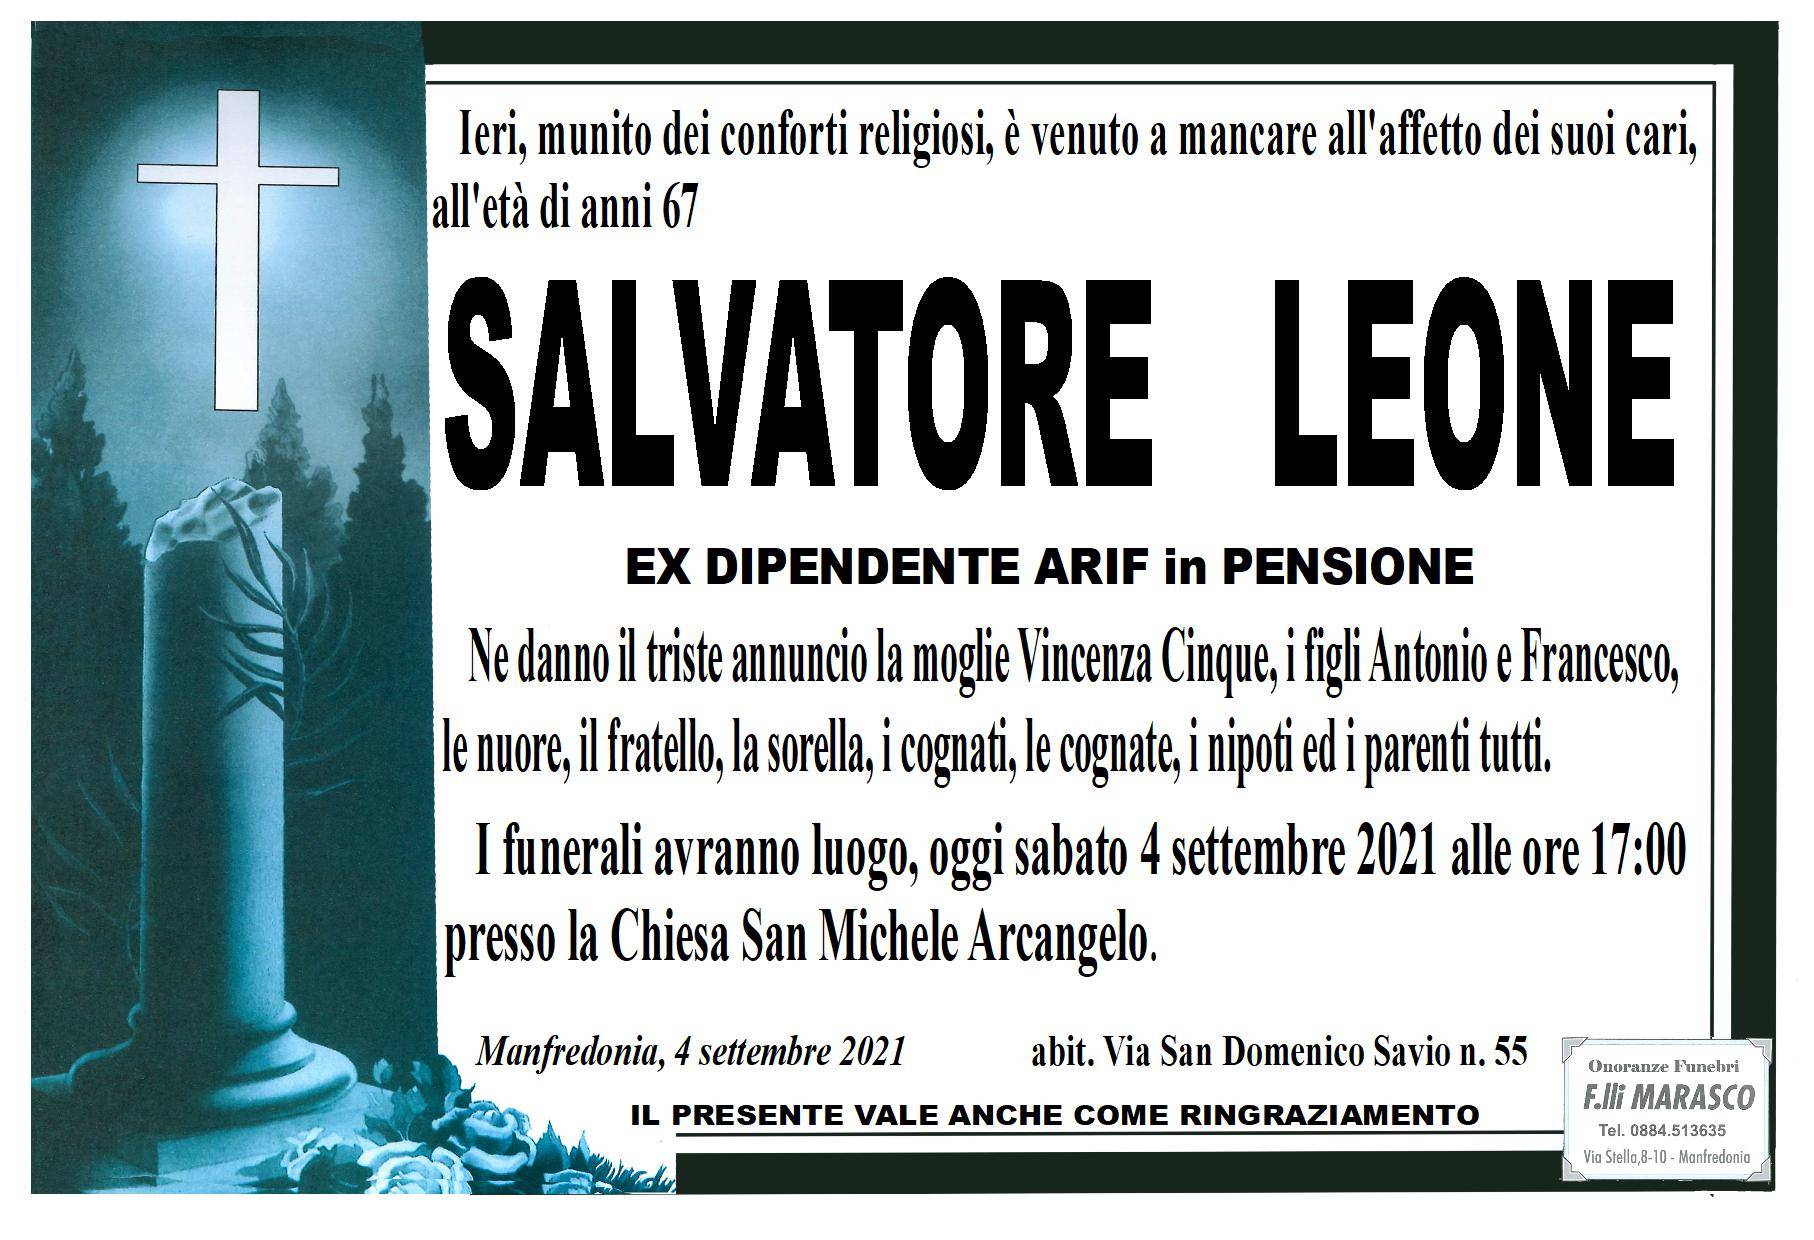 Salvatore Leone